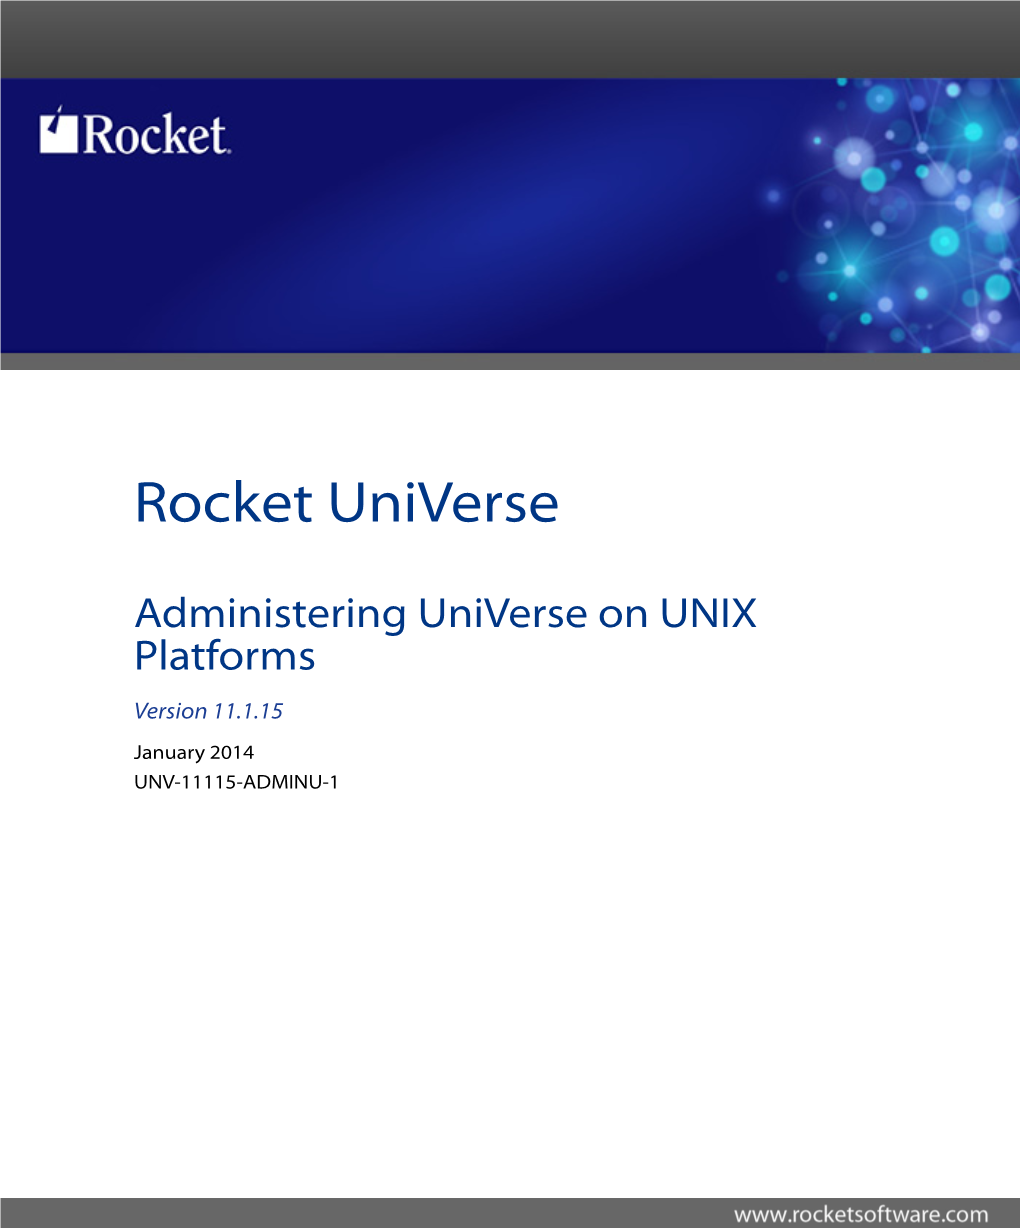 Administering Rocket Universe on UNIX Platforms